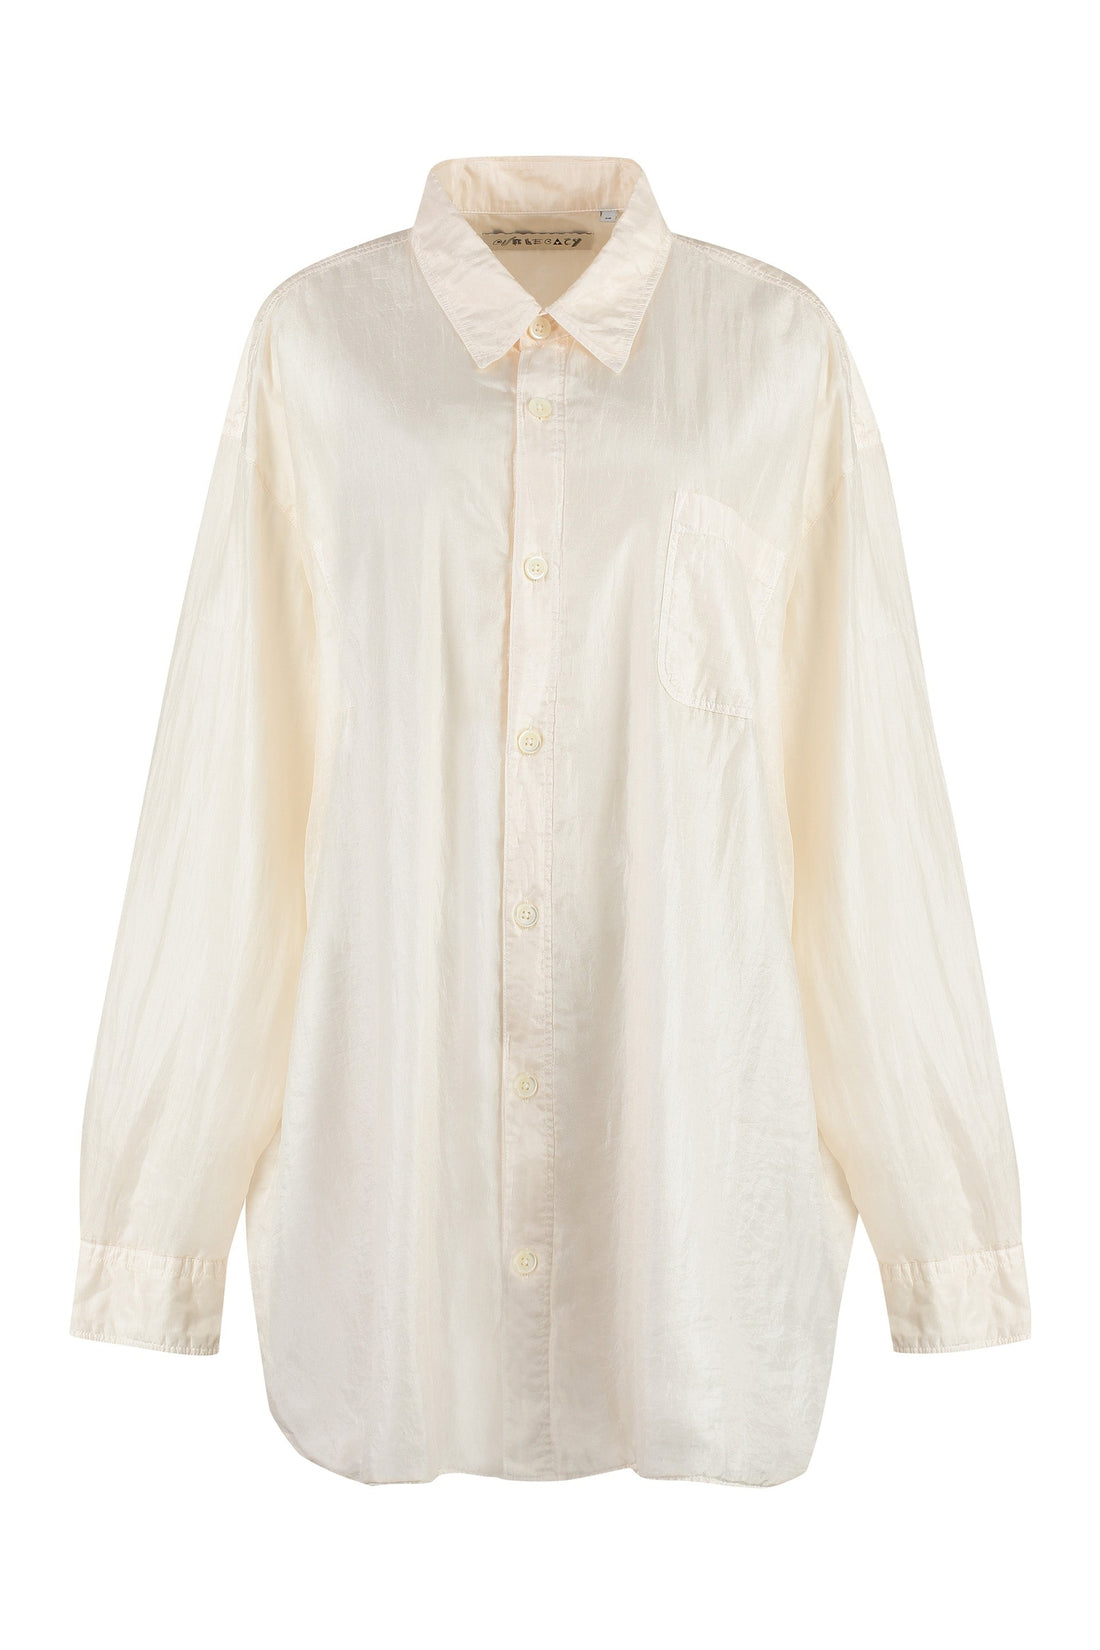 Our Legacy-OUTLET-SALE-Darling silk-cotton blend shirt-ARCHIVIST